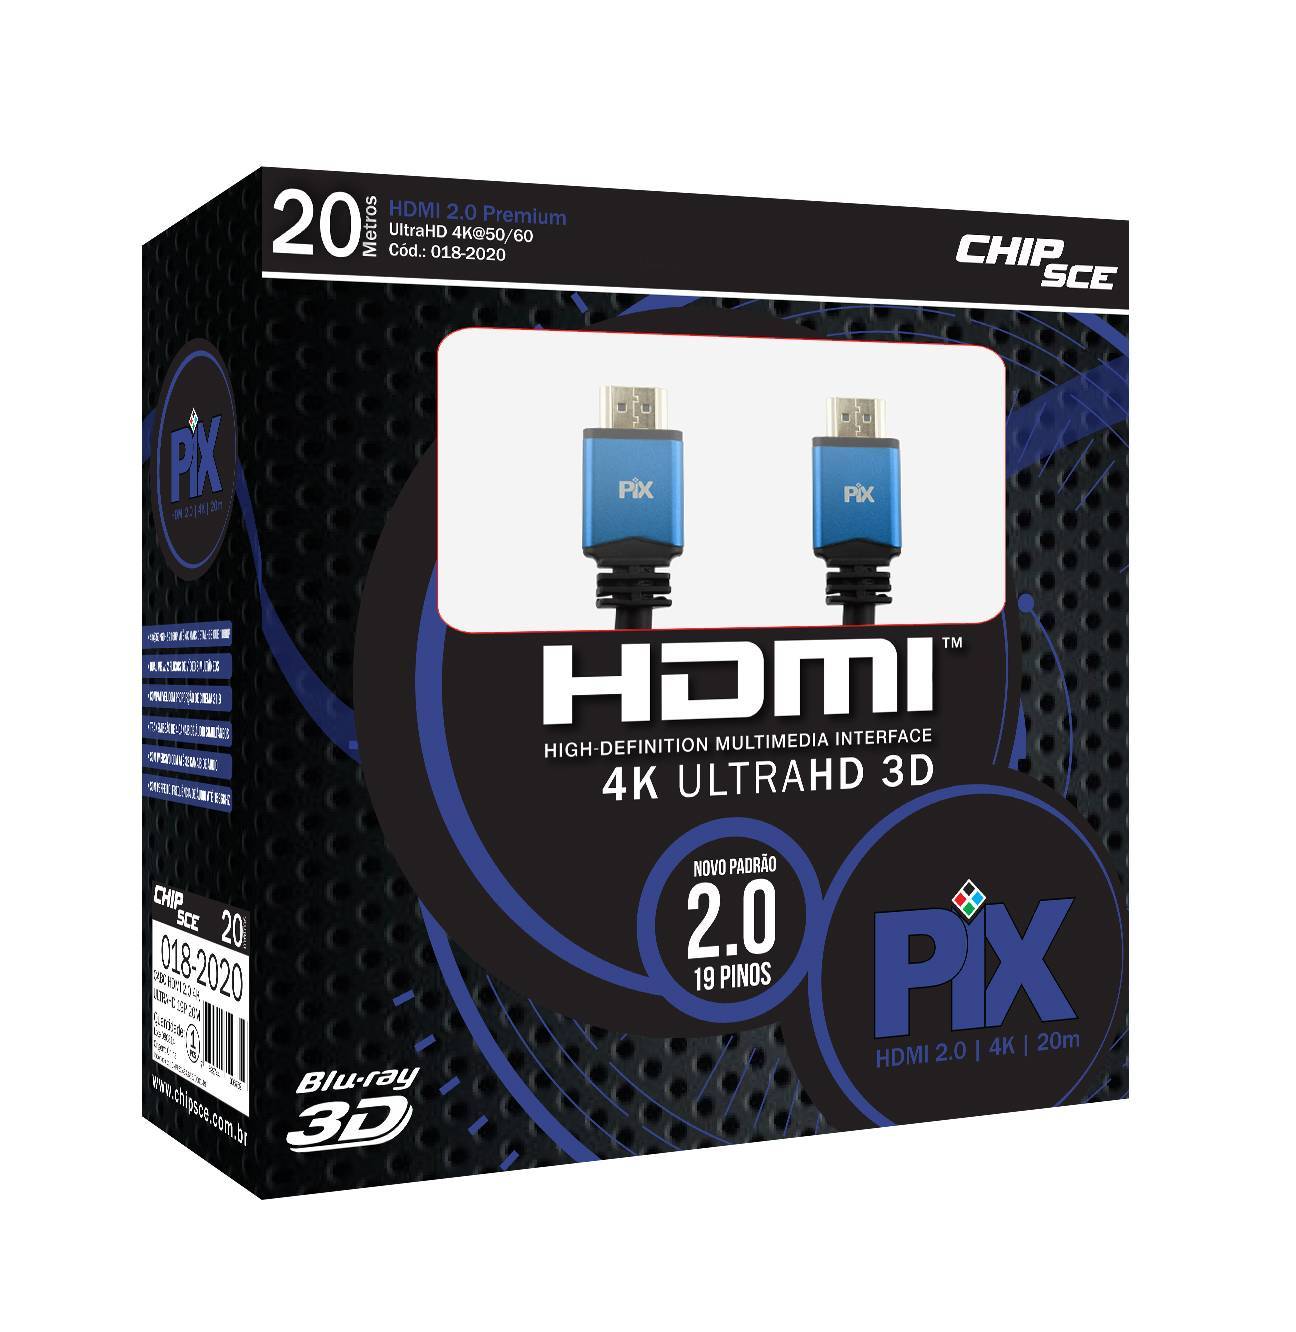 Cabo HDMI 20mt 2.0/3D/4K 19 pinos 18Gbit/s - PIX - Ilha Suportes